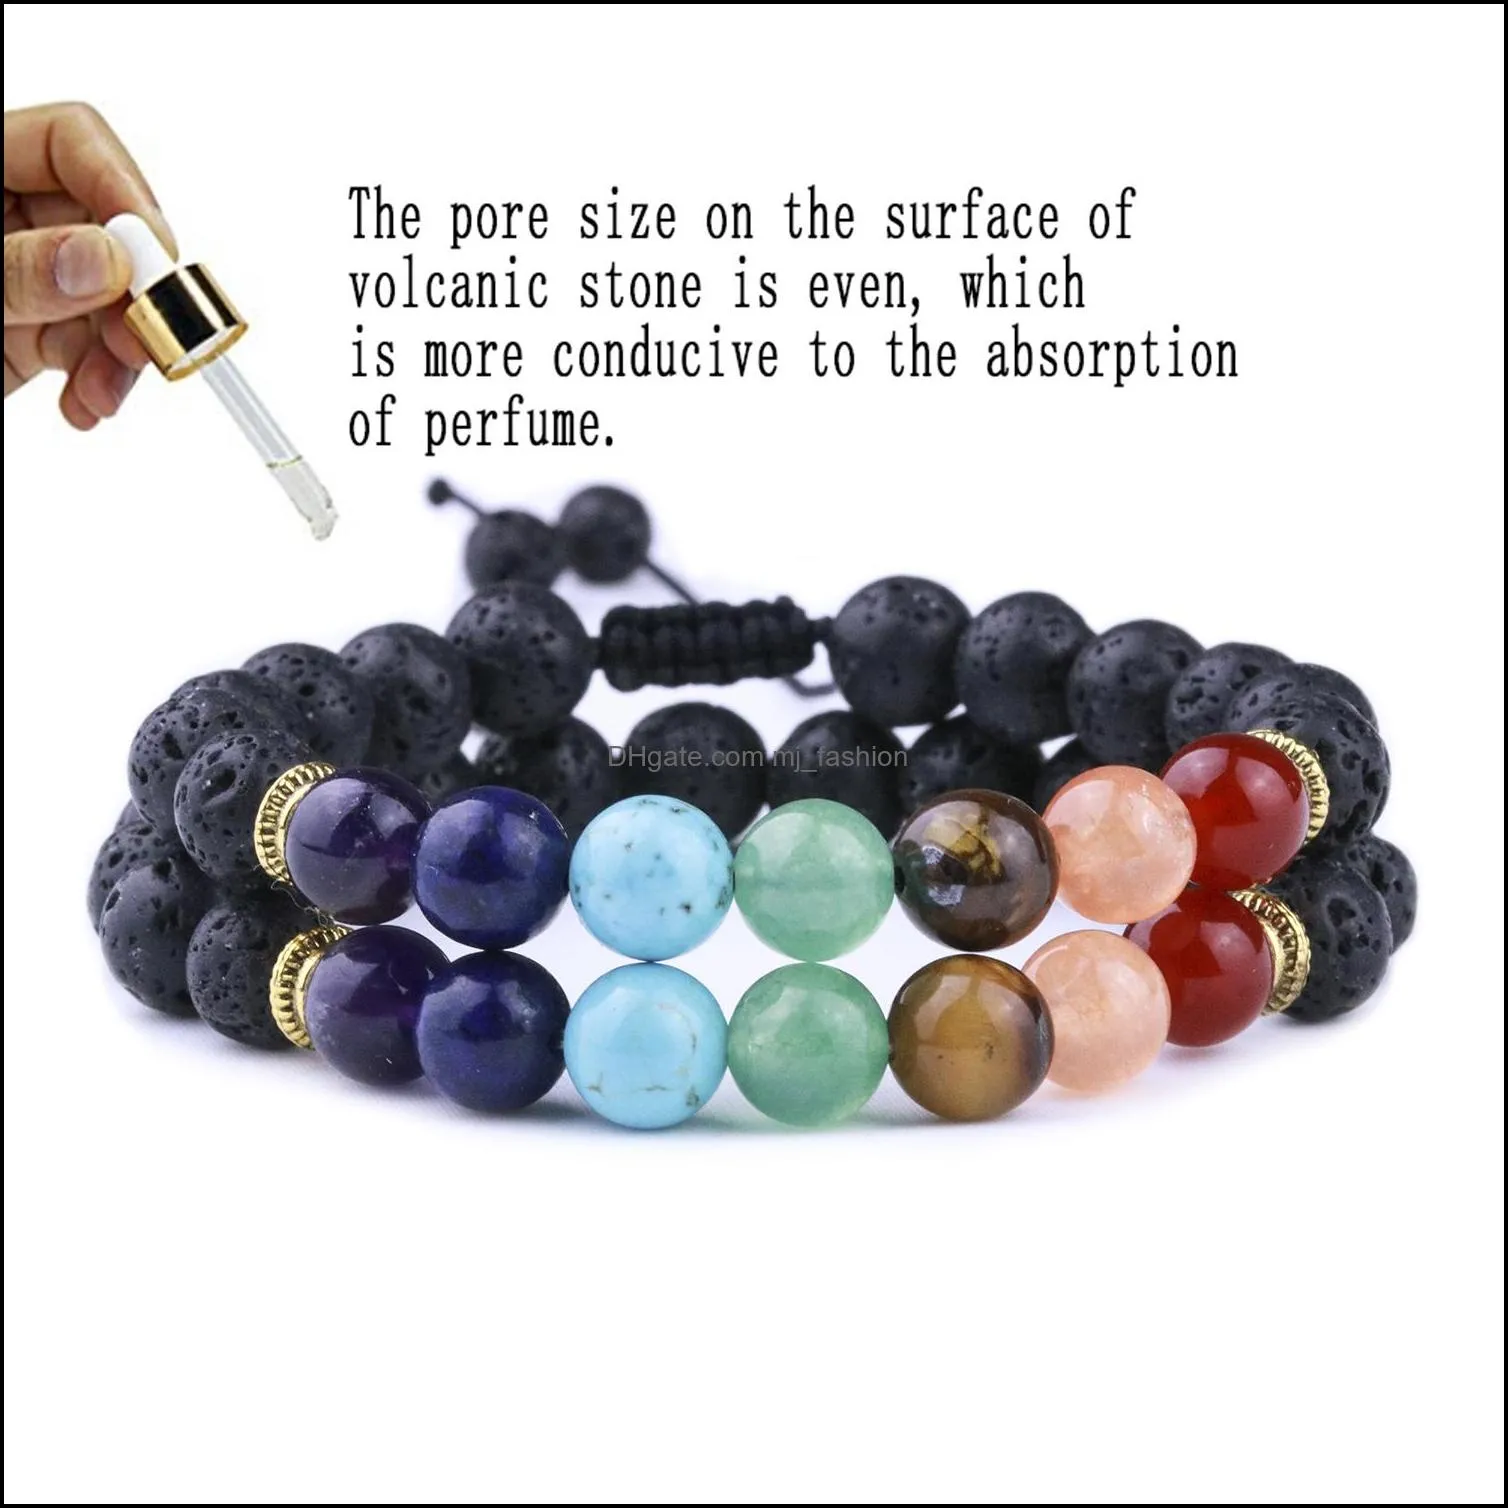 8mm natural stone black lava stone weave 7 chakra healing bracelets aromatherapy essential oil diffuser bracelet for women men jewelry